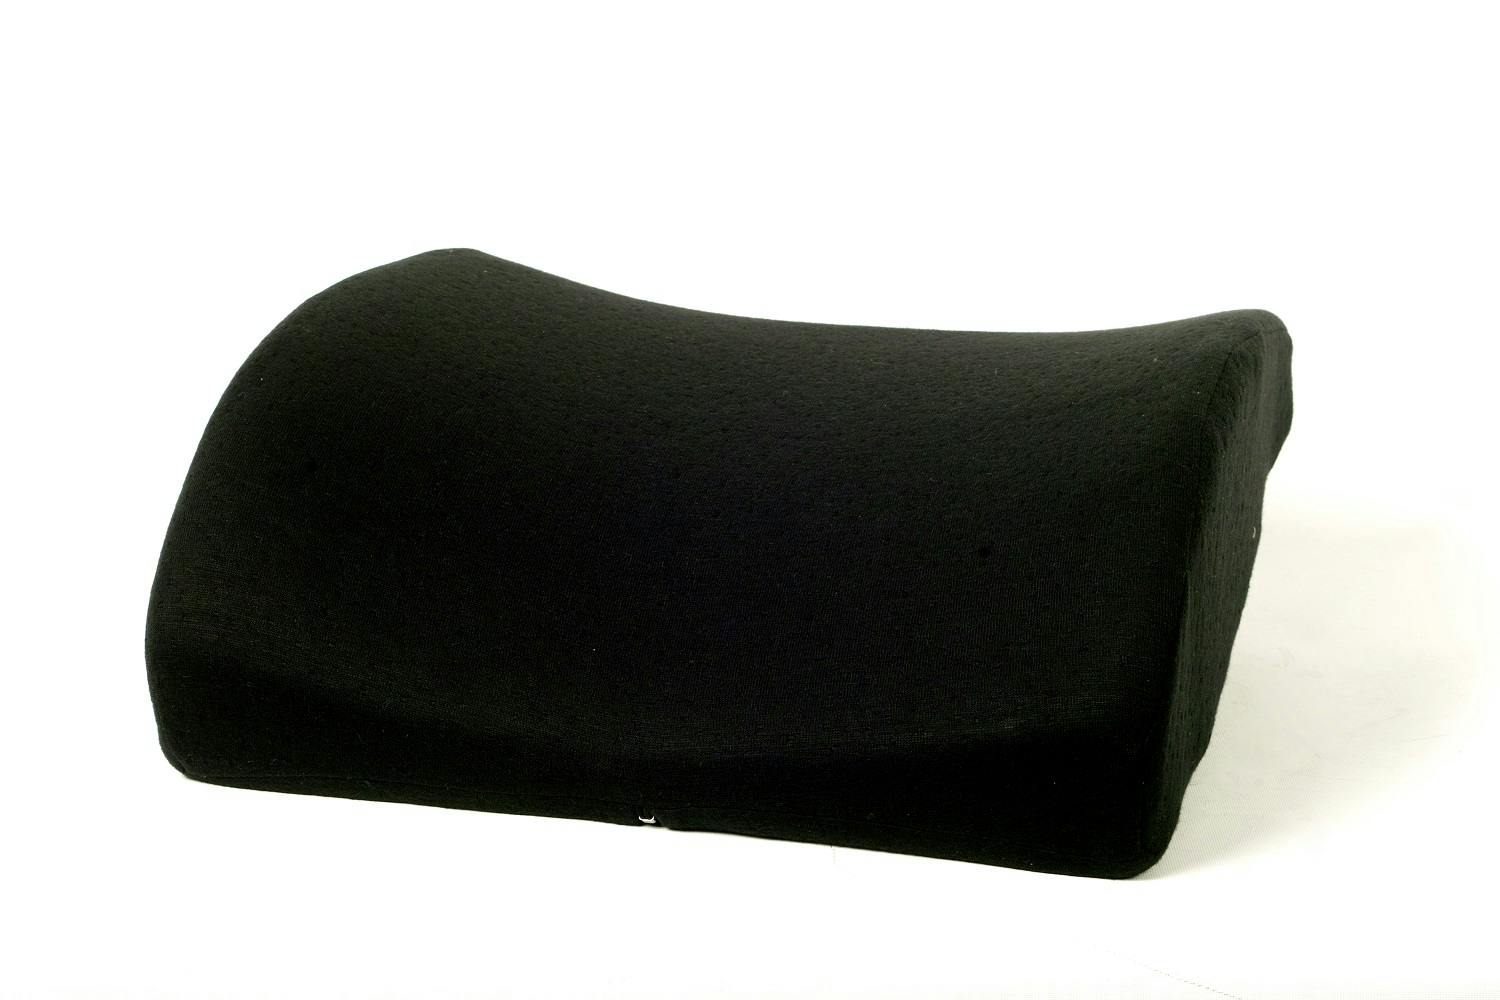 Hemmka Health ARBC01 Orthopedic Back Cushion